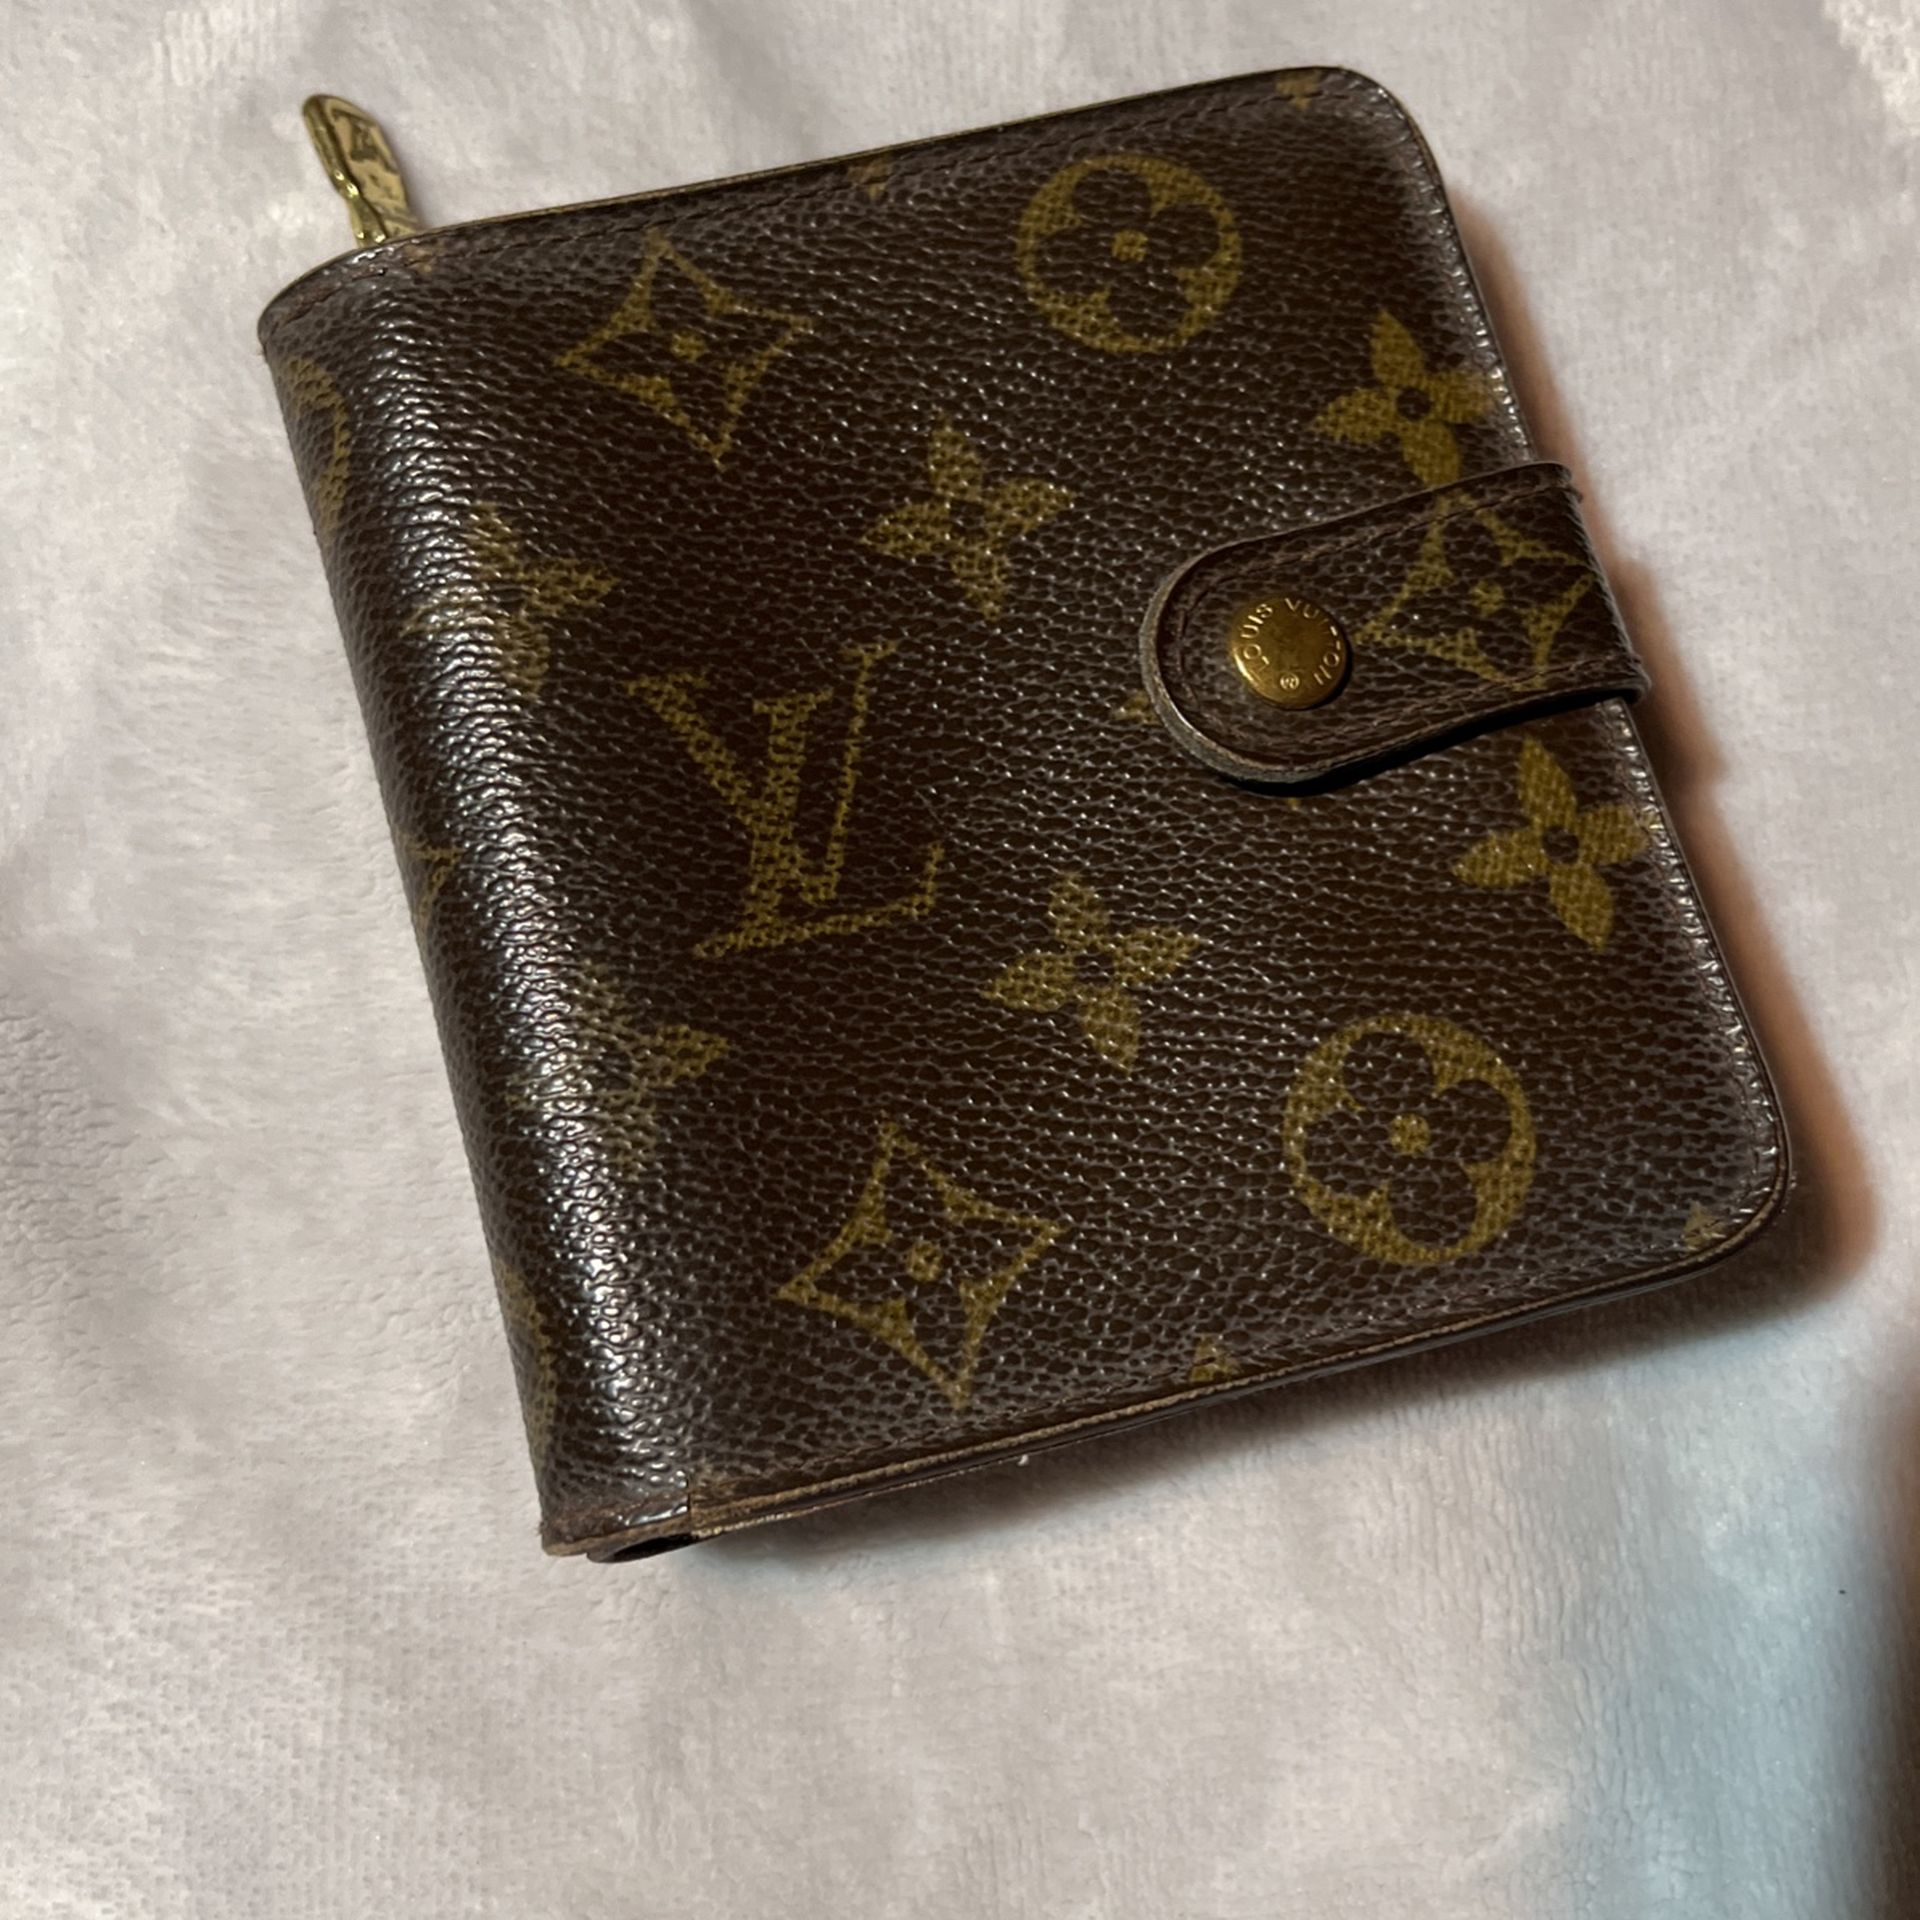 Louis Vuitton Small Wallet Authentic 